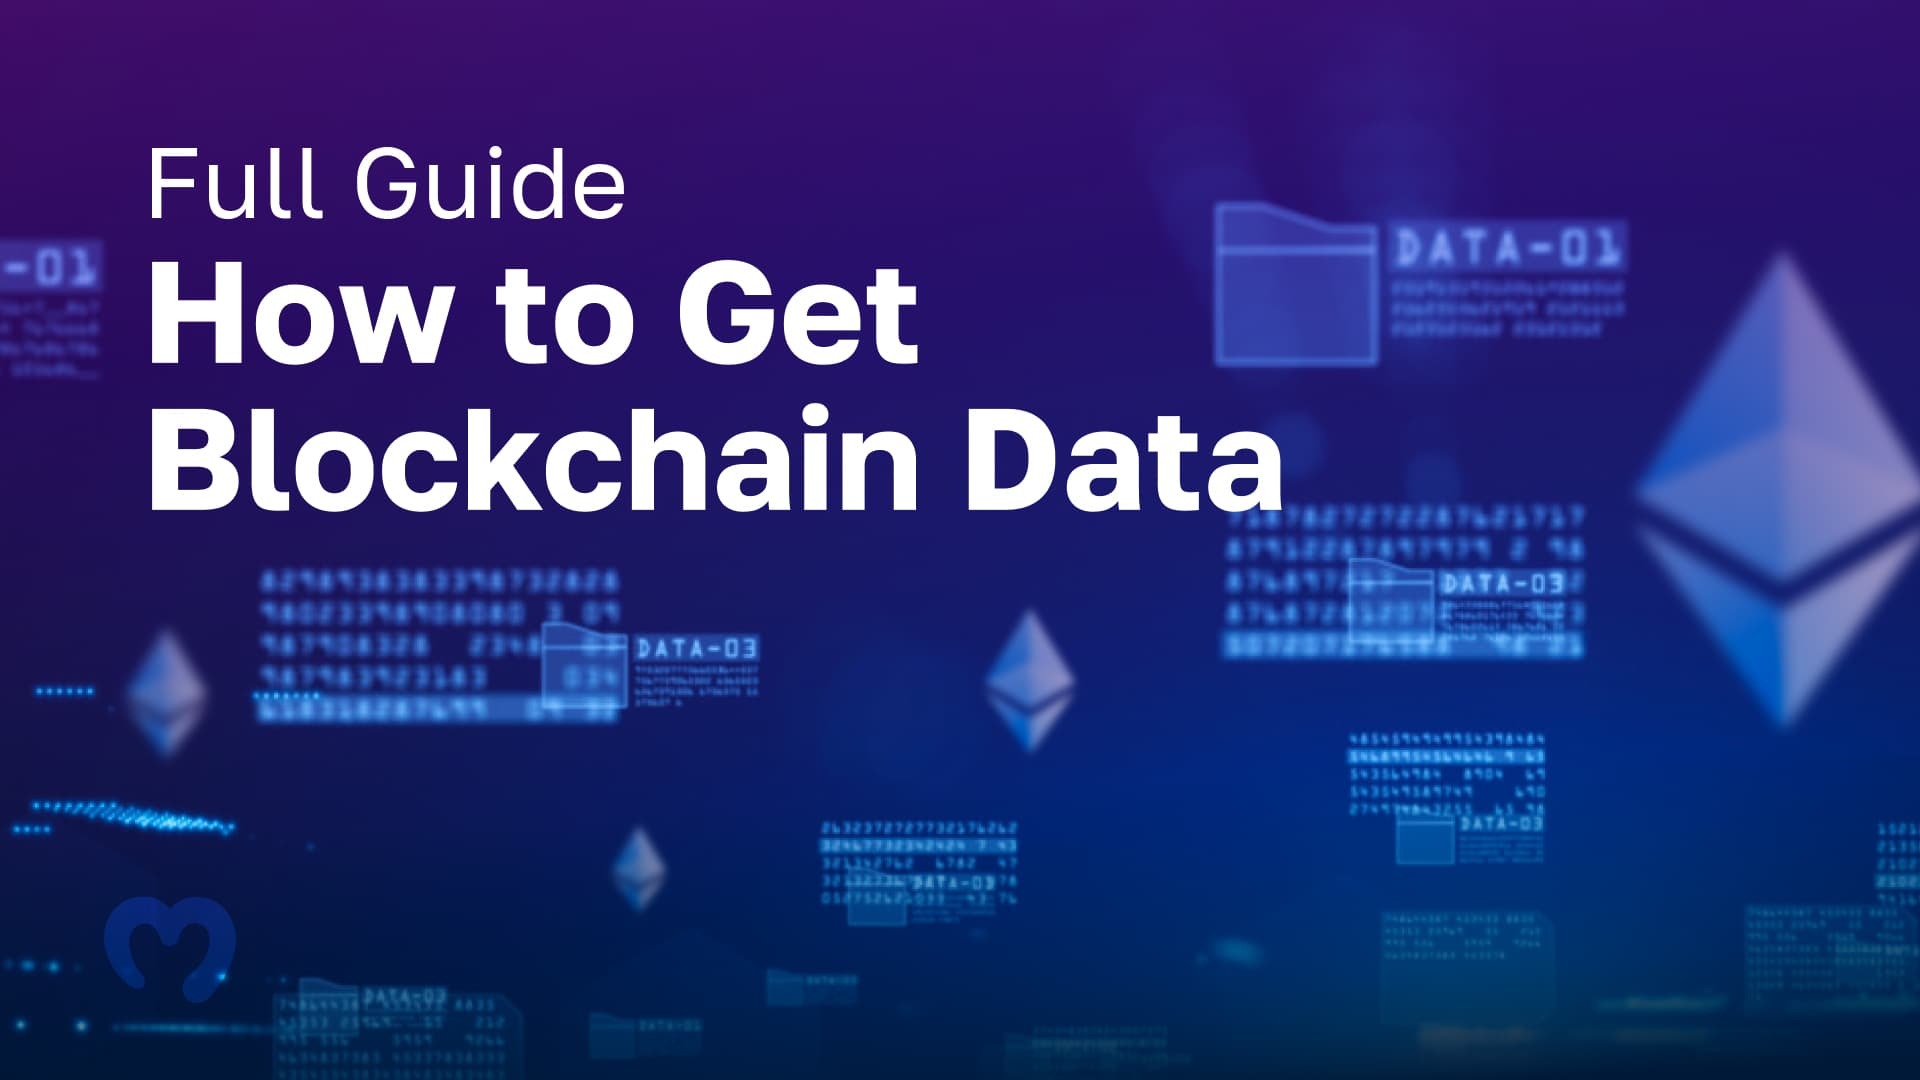 Full Guide: How to Get Blockchain Data